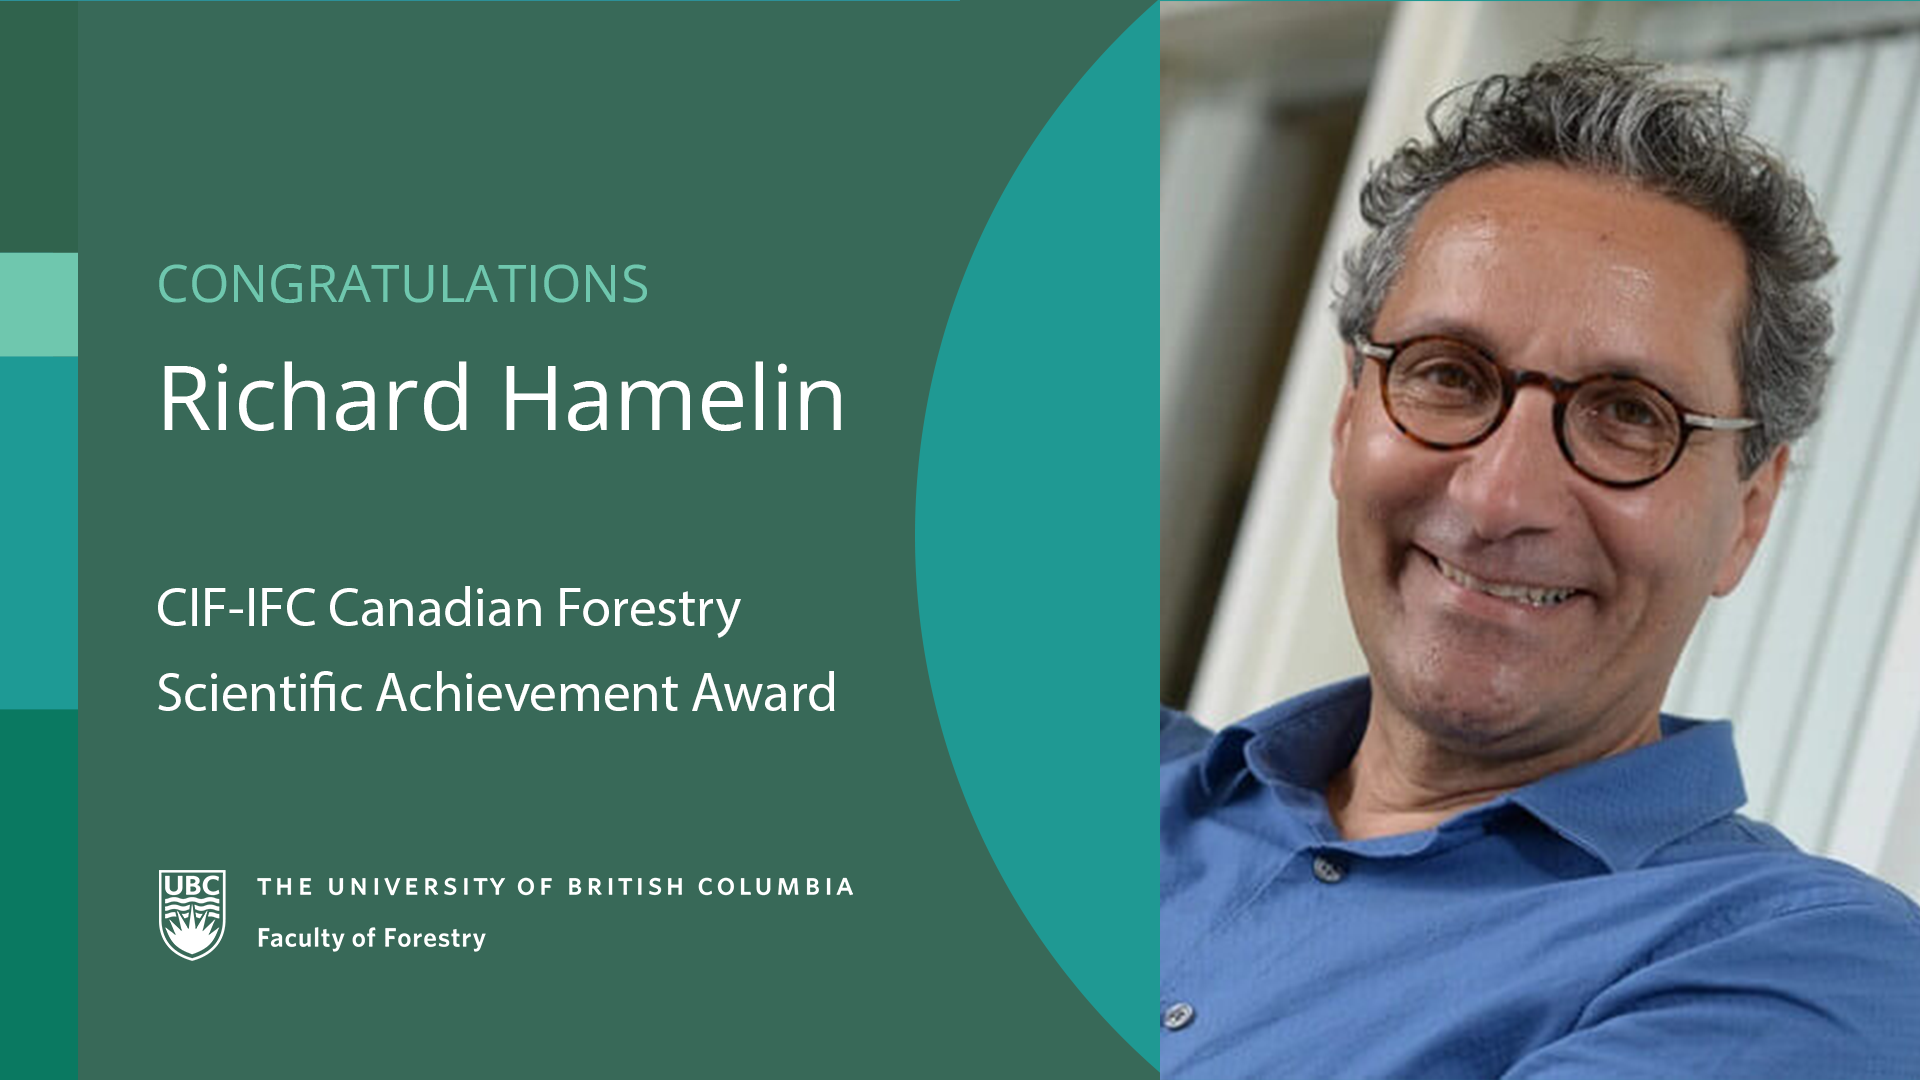 Photo of Richard Hamelin with text reading "Congratulations Richard Hamelin CIF-IFC Canadian Forestry Award"